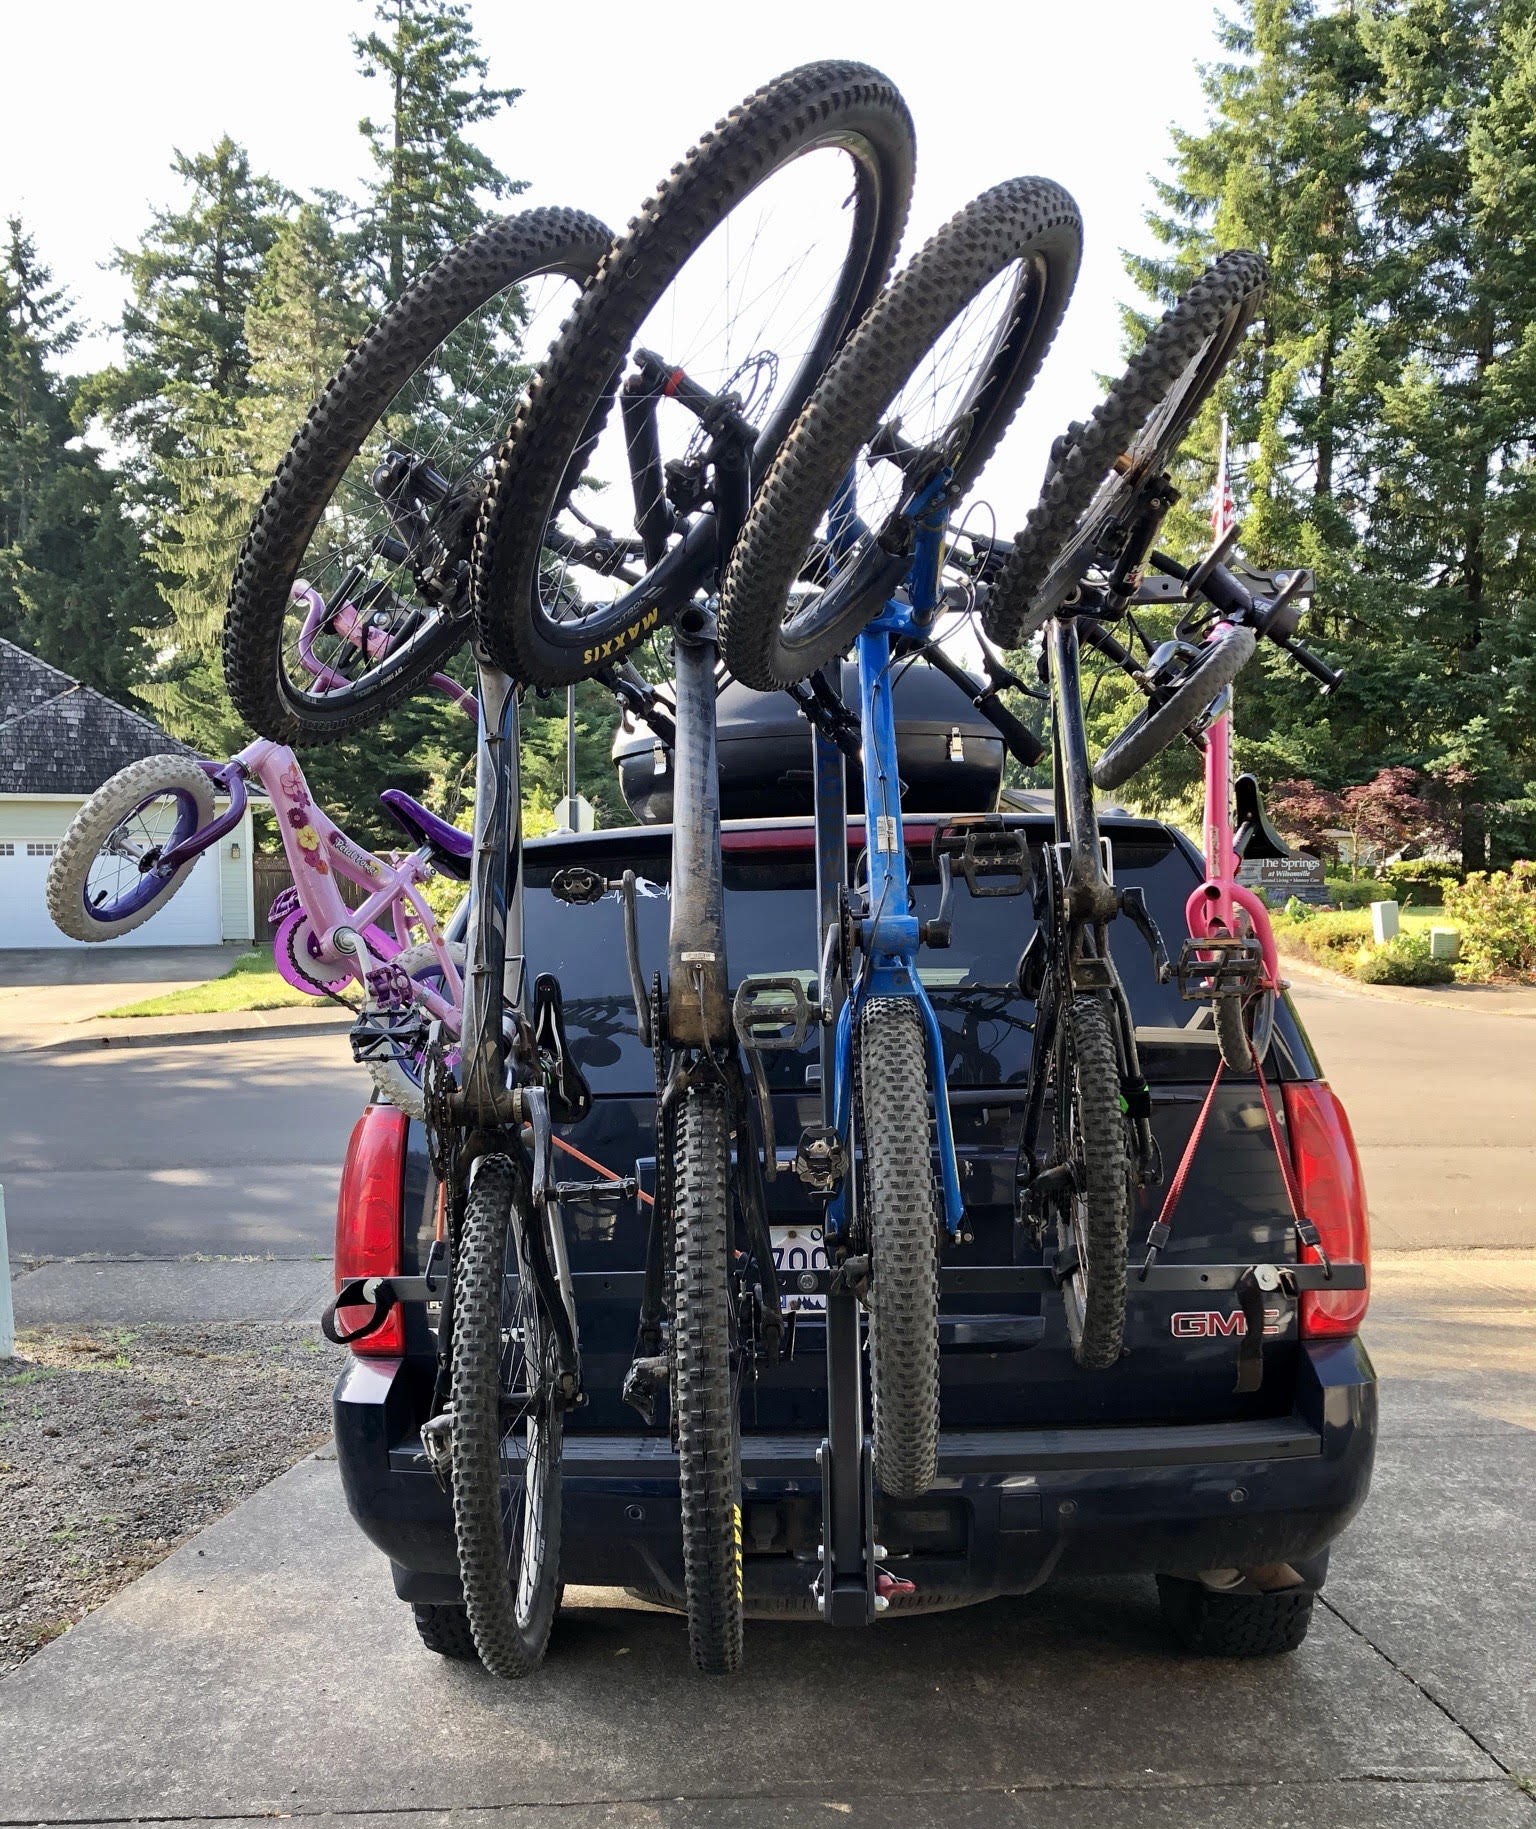 vertical bike rack